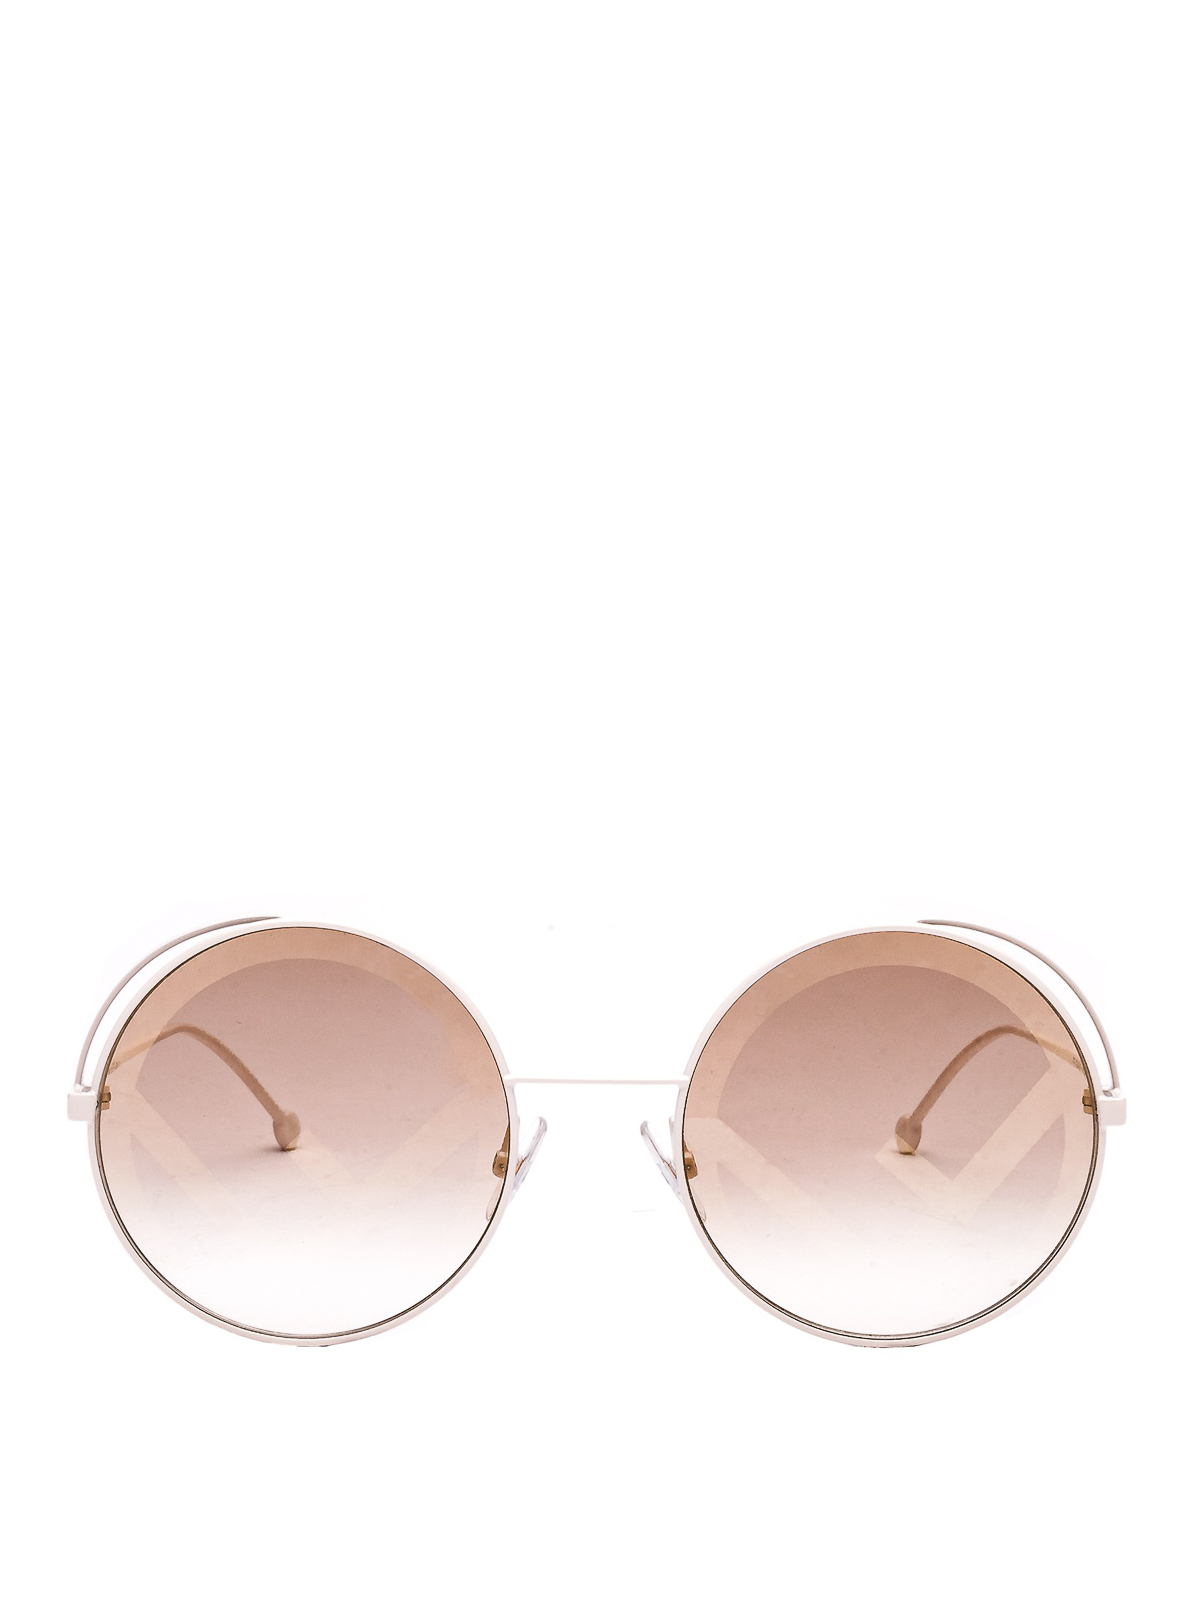 Sunglasses Fendi - Fendirama round sunglasses - FF0343SVK6EB